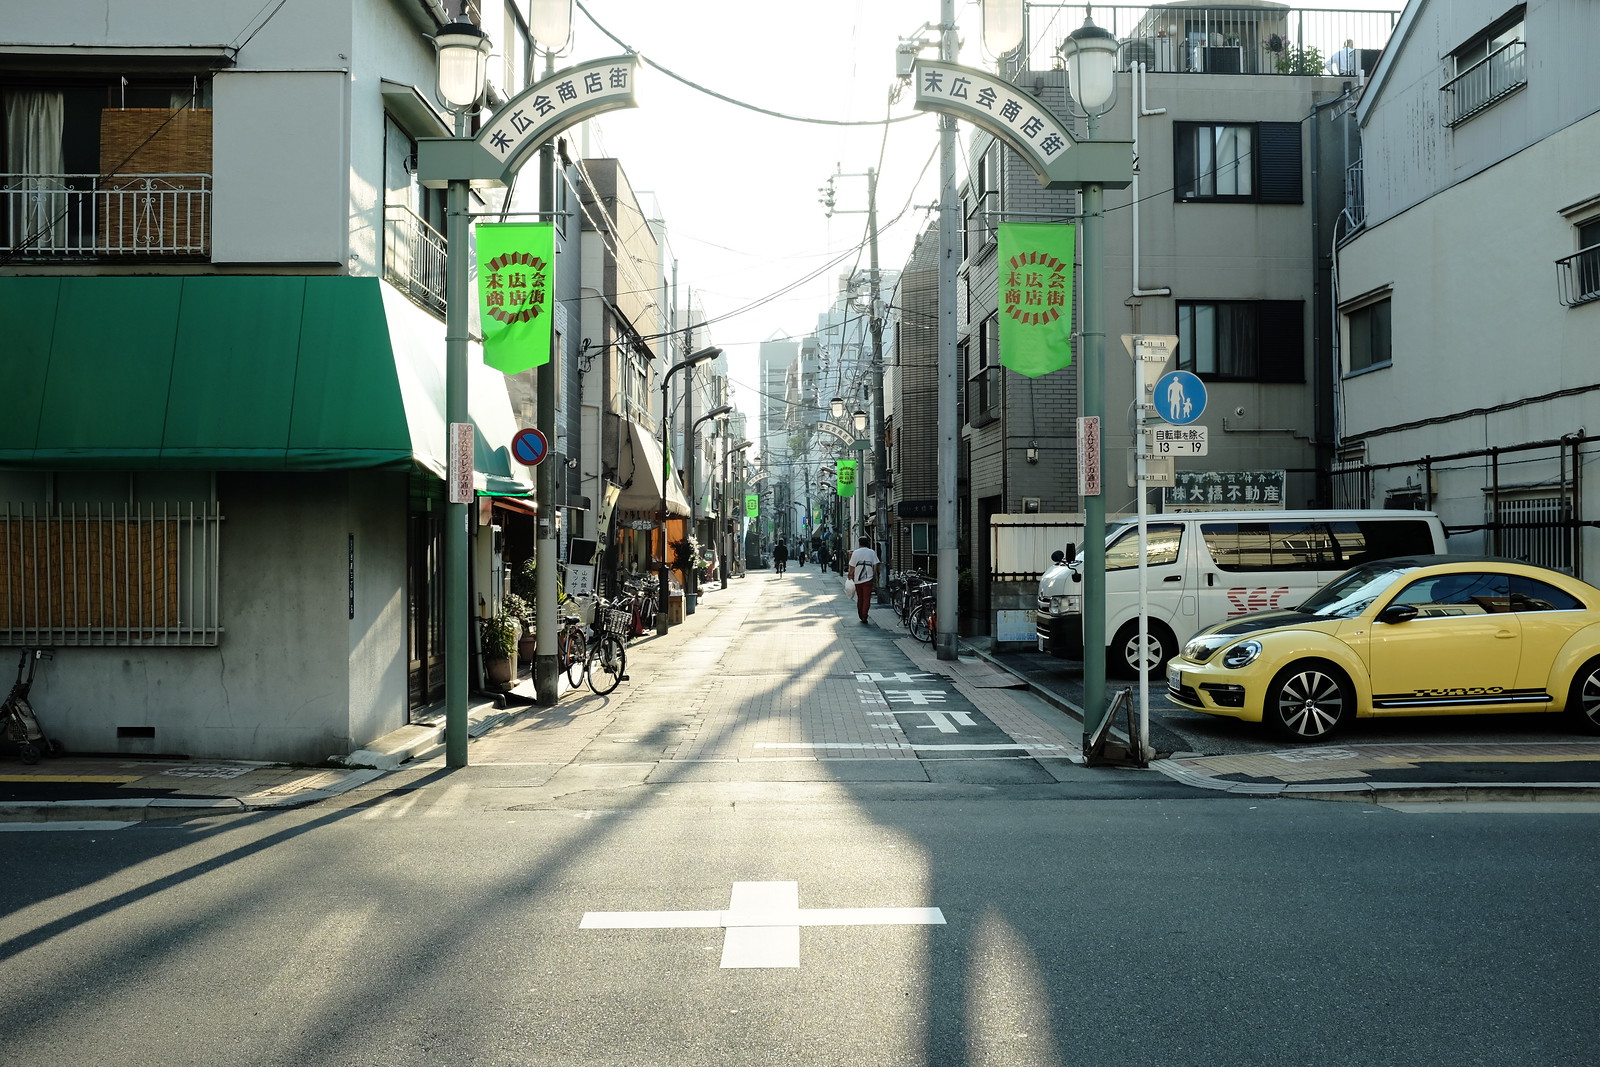 The Taito-ku Tokyo photo by FUJIFILM X100S.